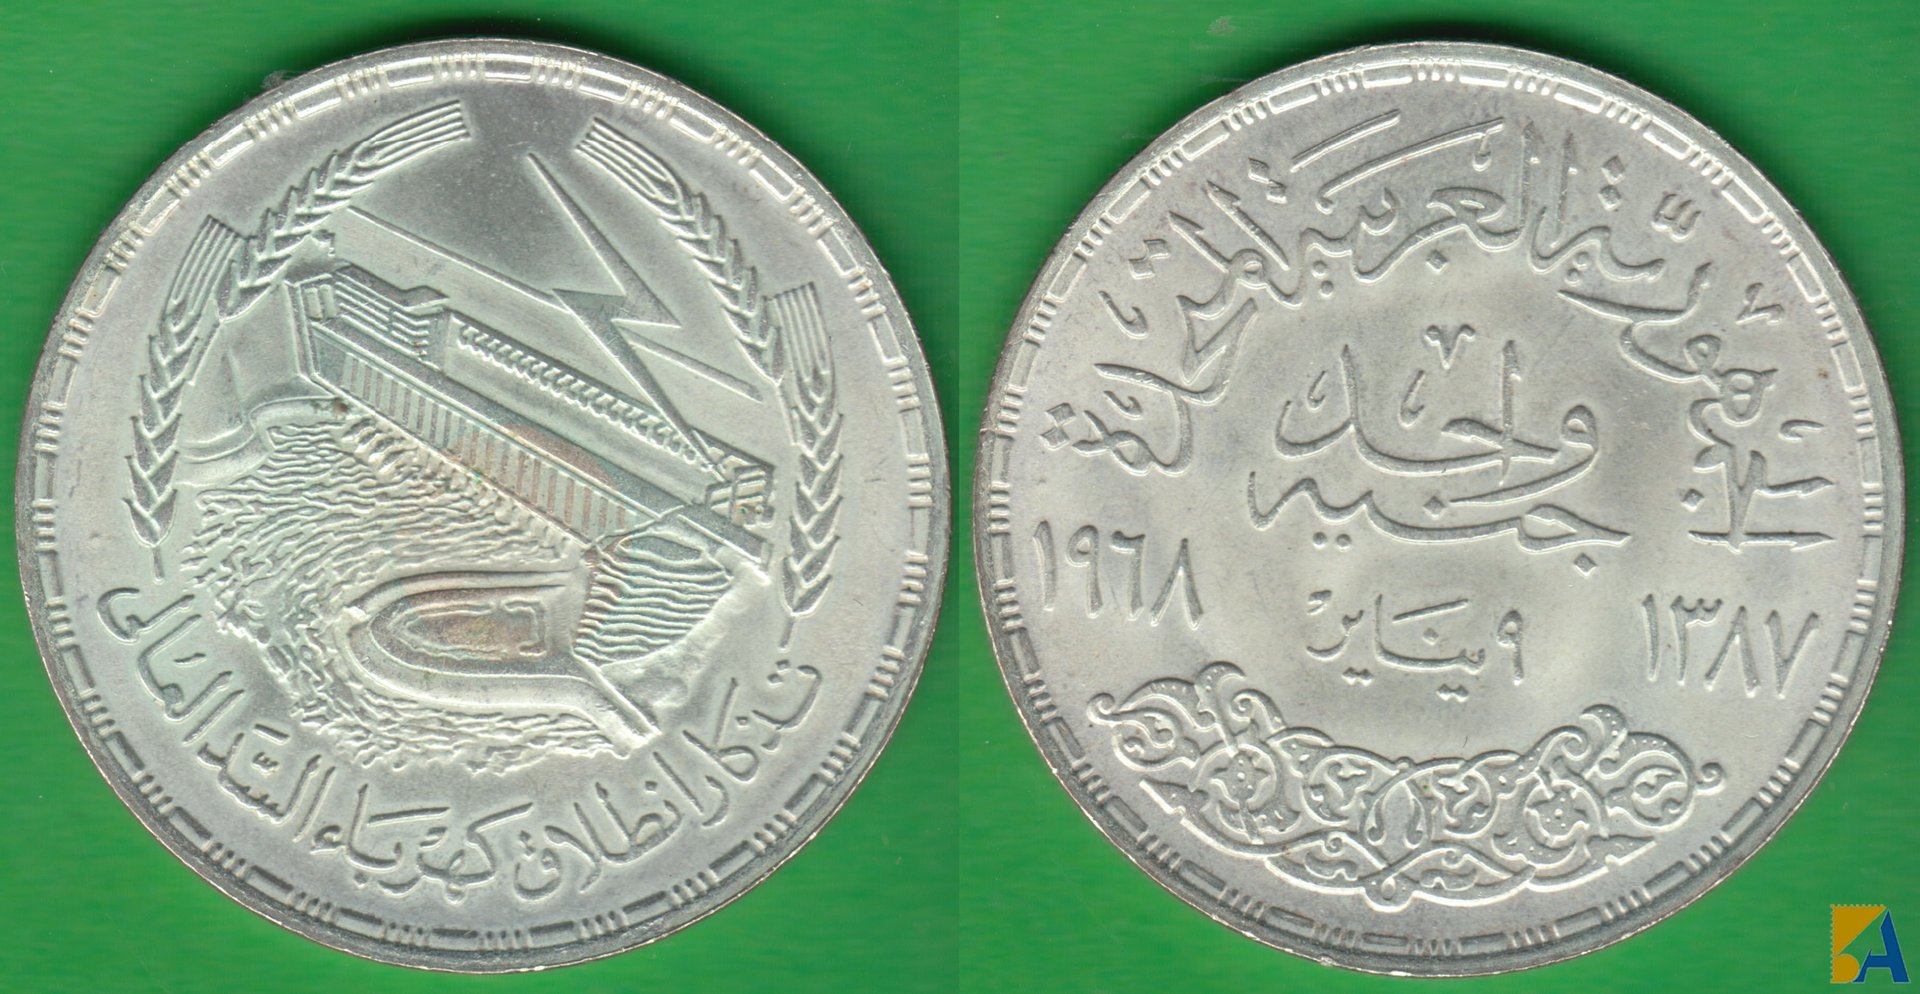 EGIPTO - EGYPT. 1 LIBRA (POUND) DE 1968. PLATA 0.720. (4)